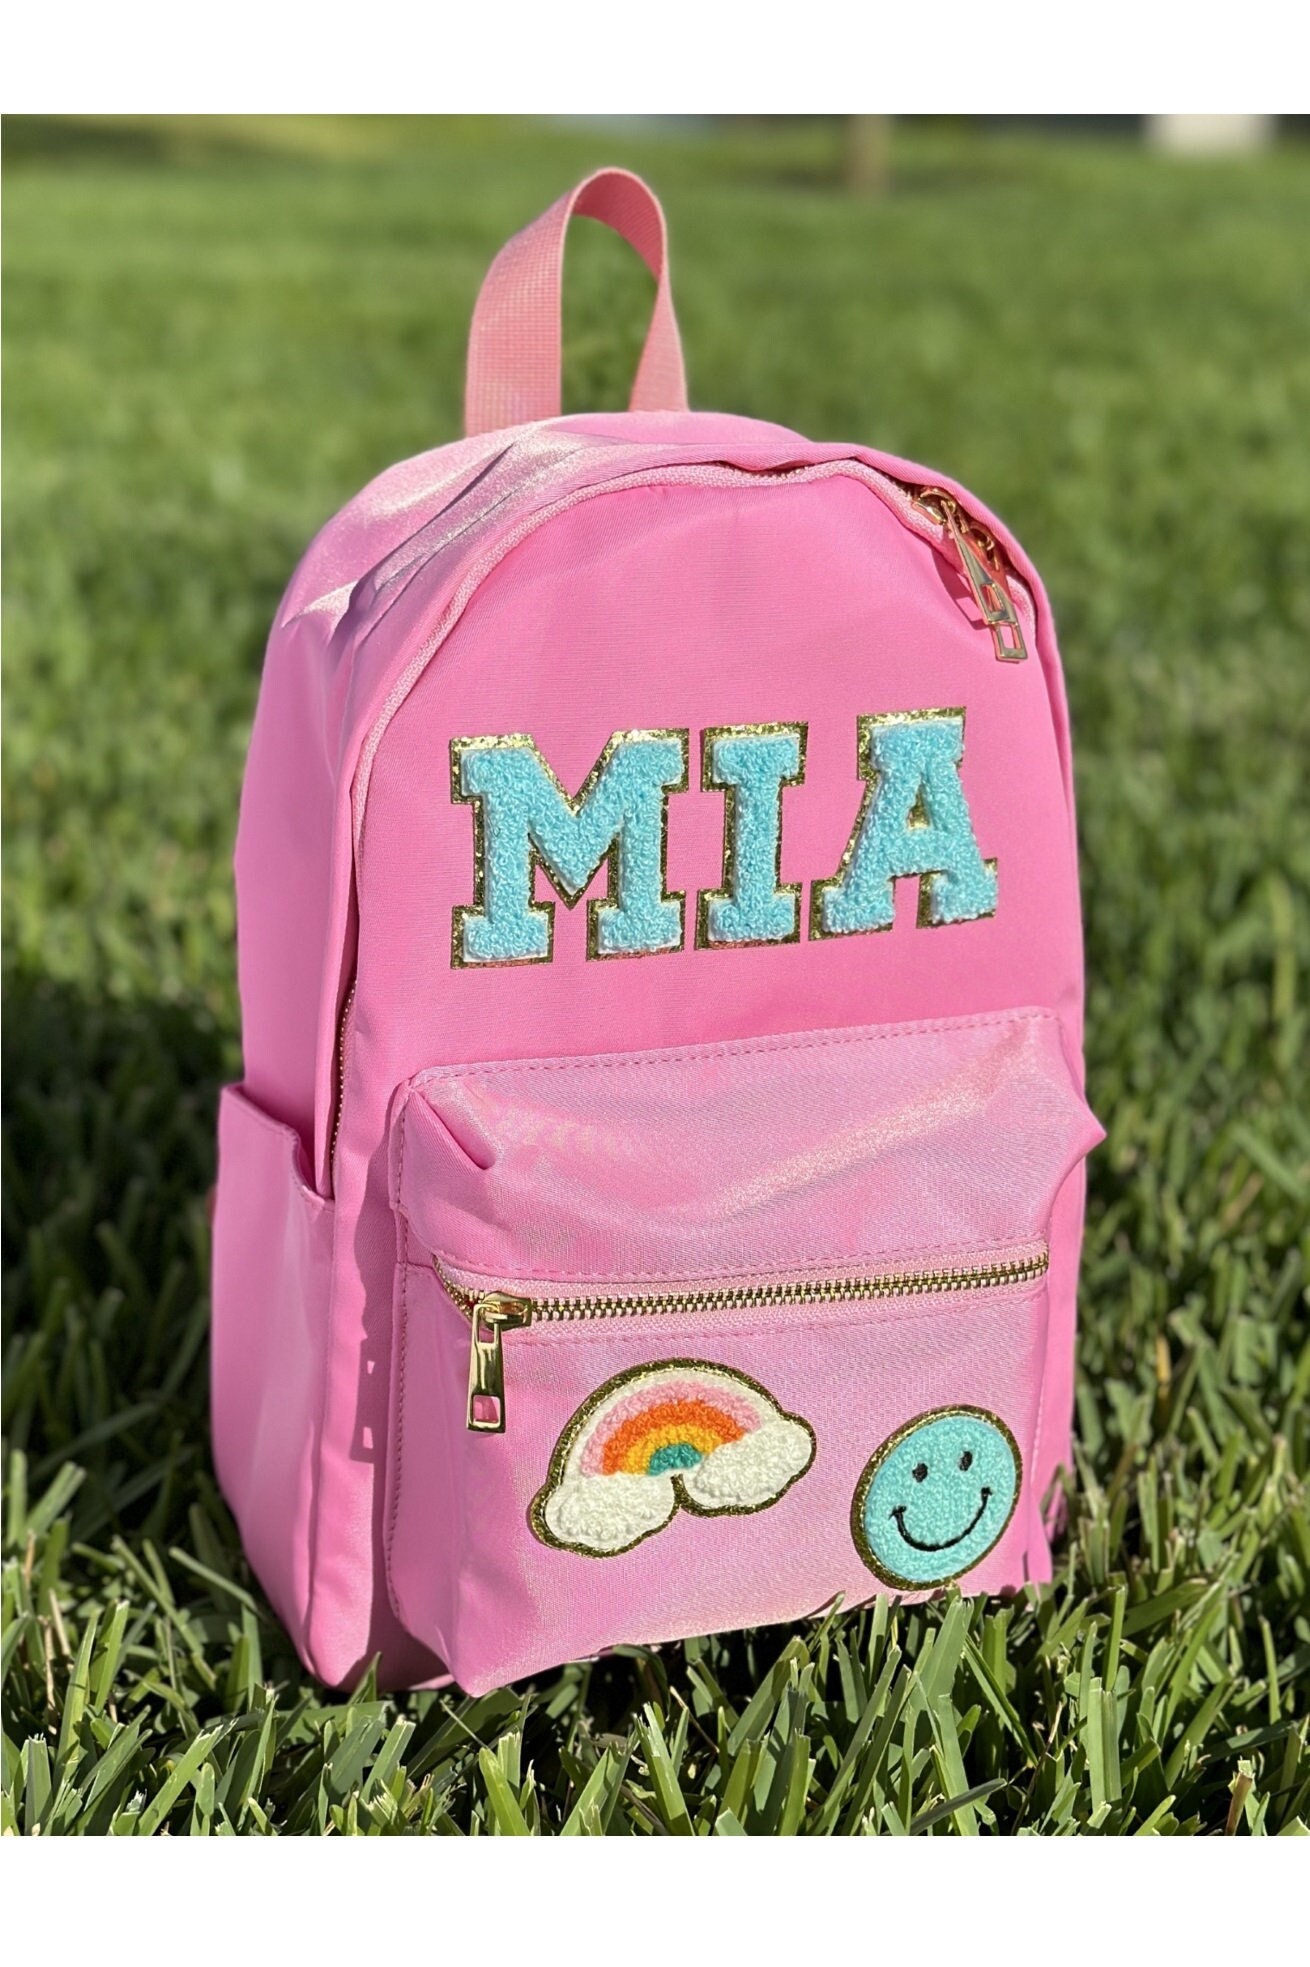 M&M backpack  Clothes design, Backpacks, Fashion